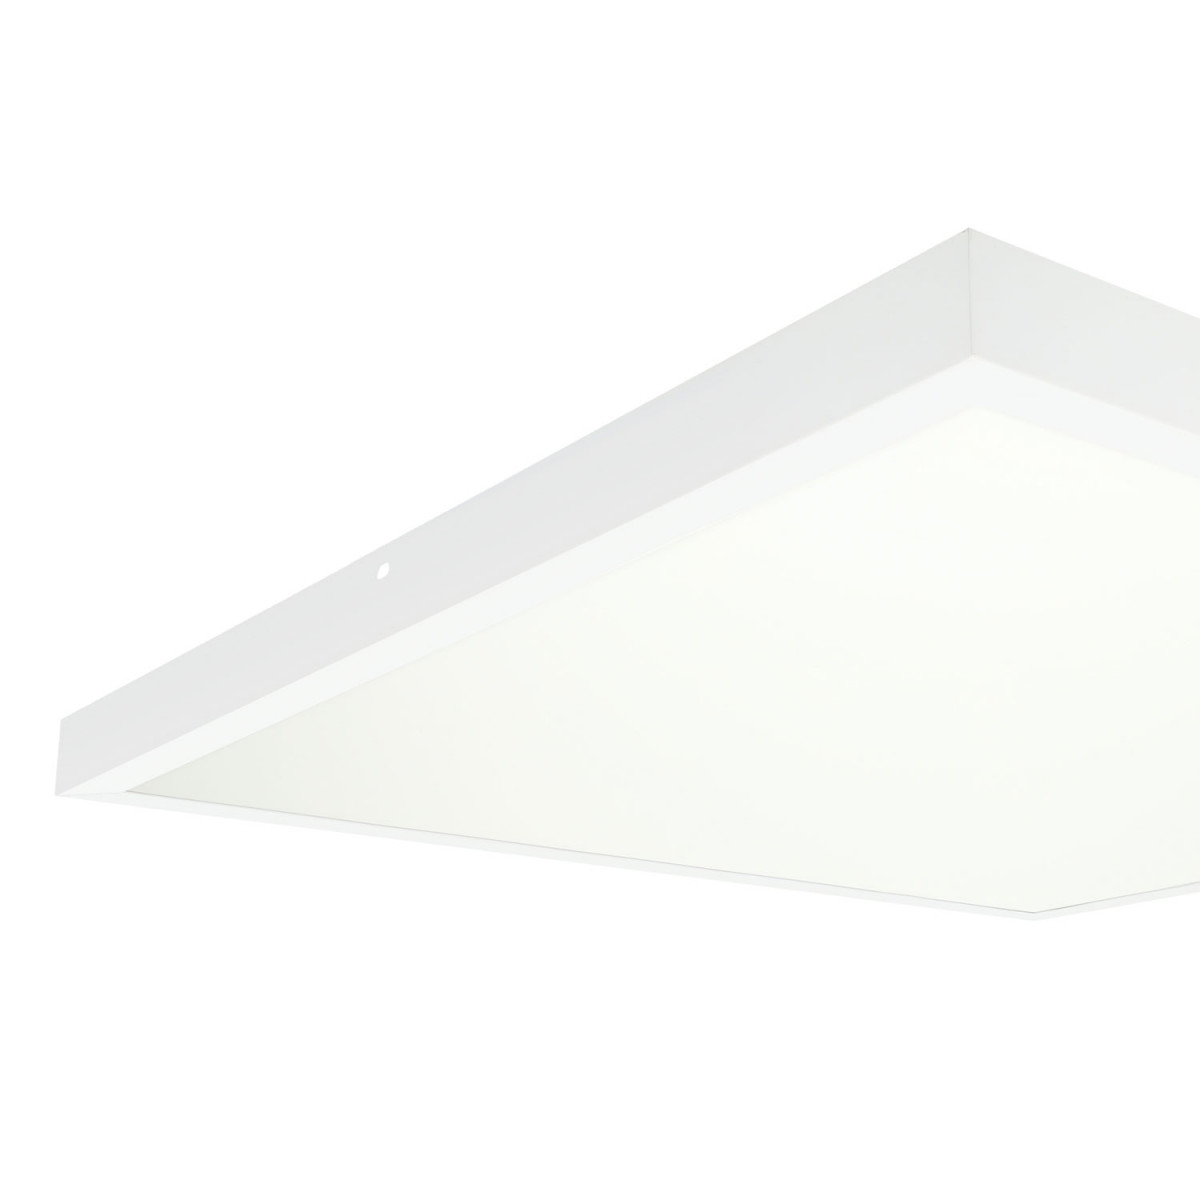 Panel LED superficie 60x60 48W marco blanco